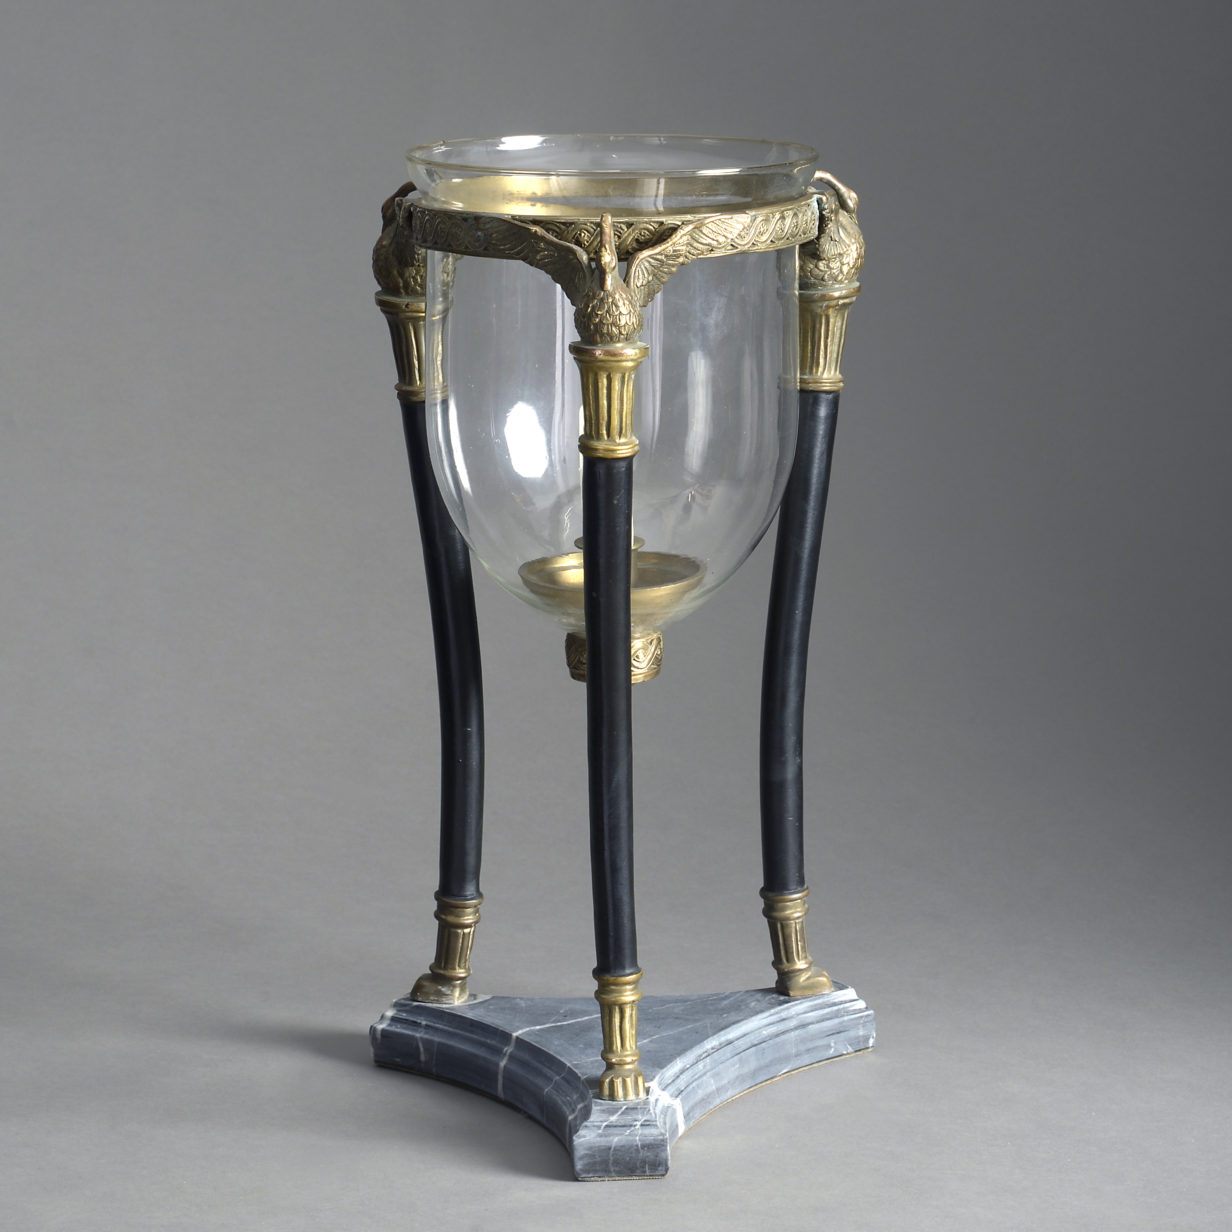 Late 19th century neo-classical storm lantern